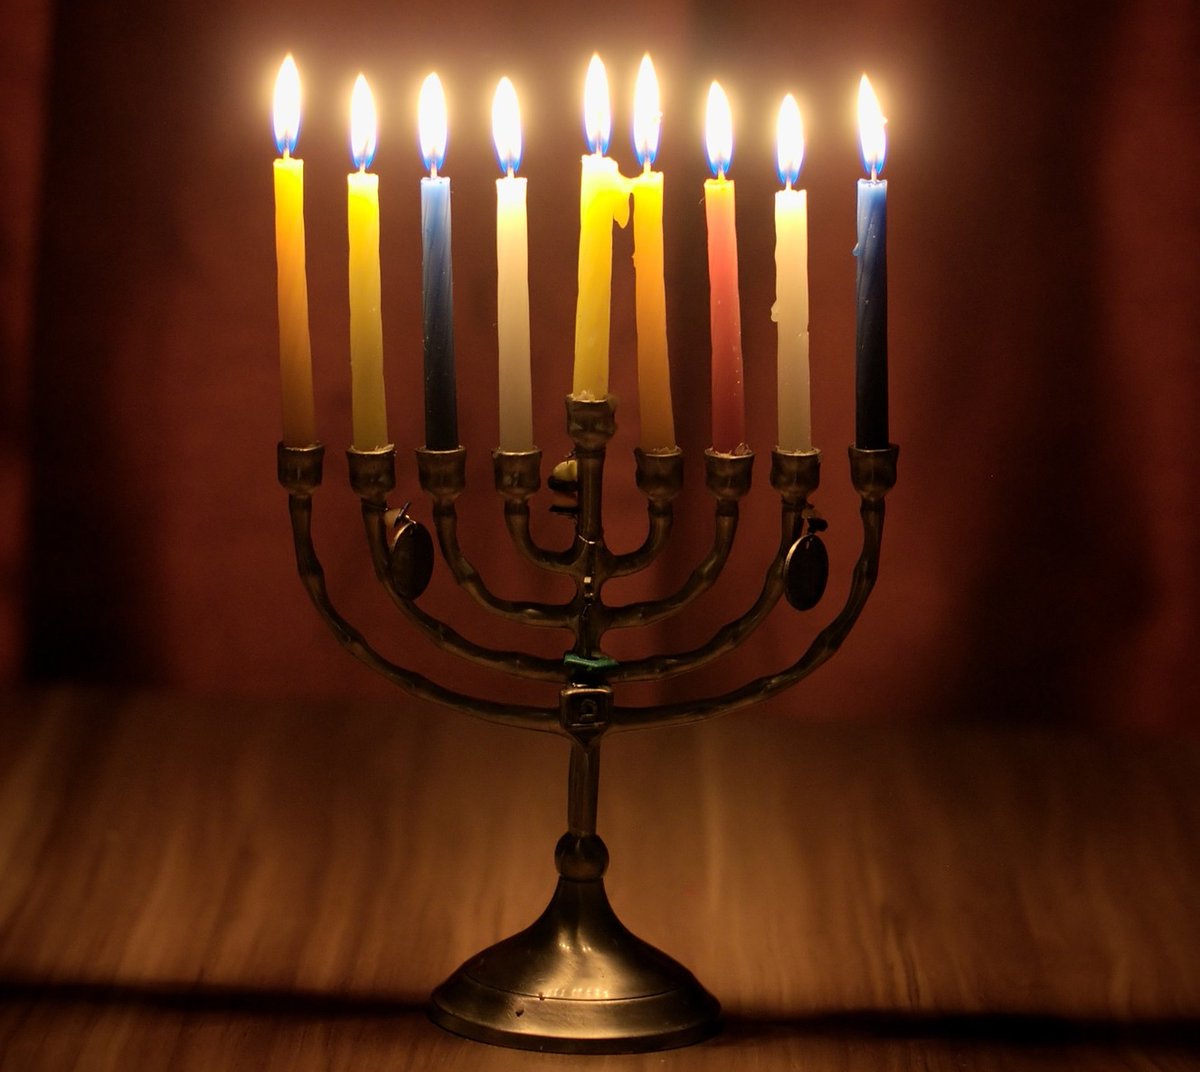 Wishing a Happy Hanukkah to all those who celebrate over the next eight nights and days!  #HanukkahSameach 

Image by Evgeni Tcherkasski, Pixabay